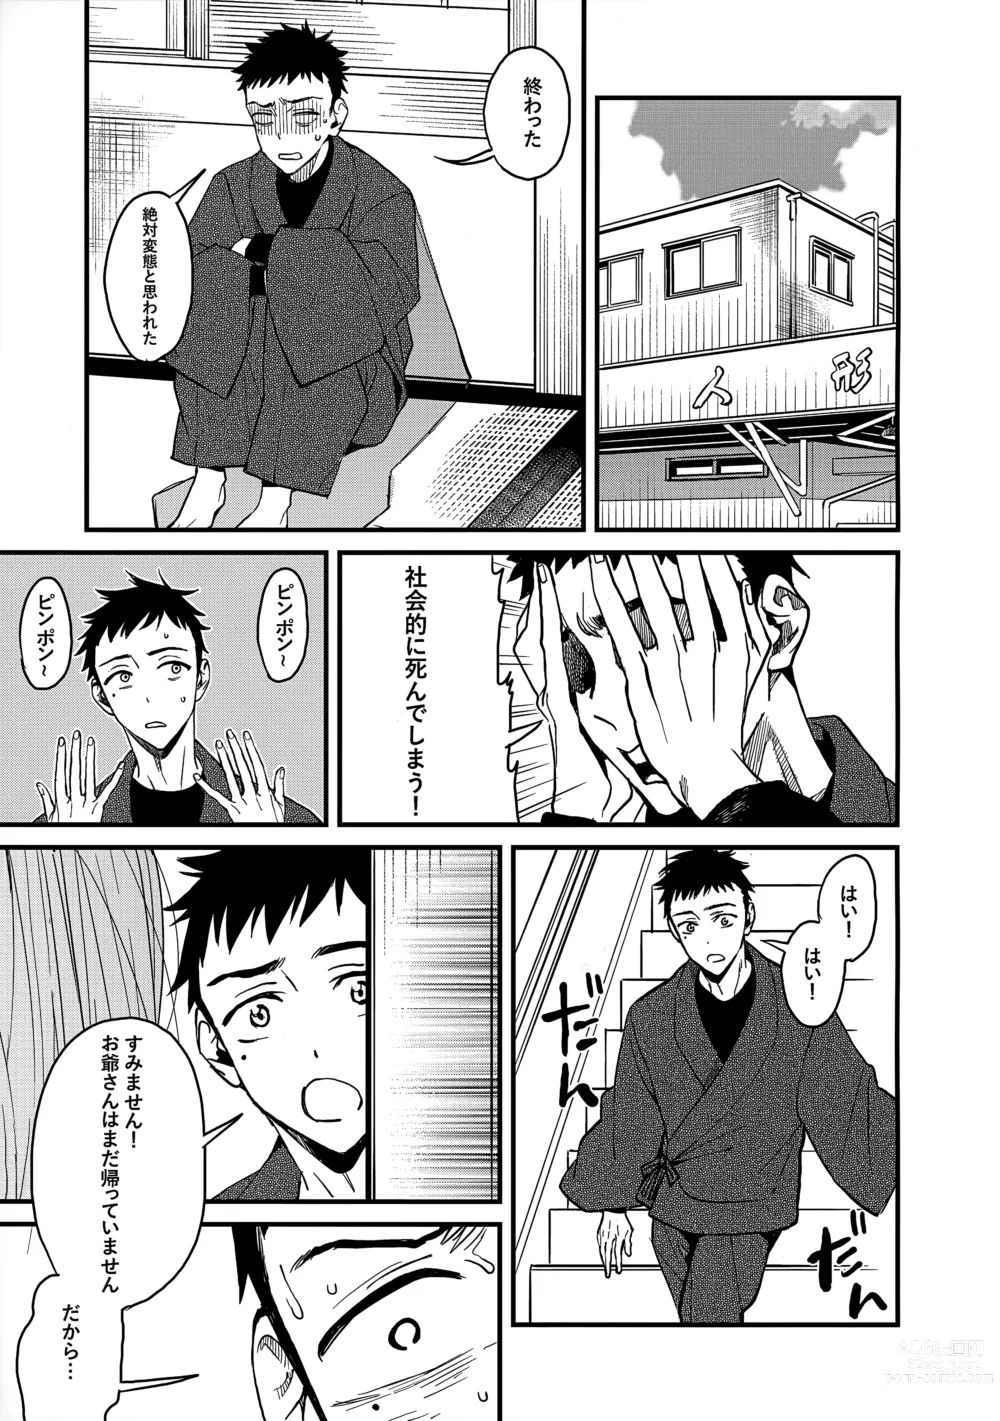 Page 10 of doujinshi Koi